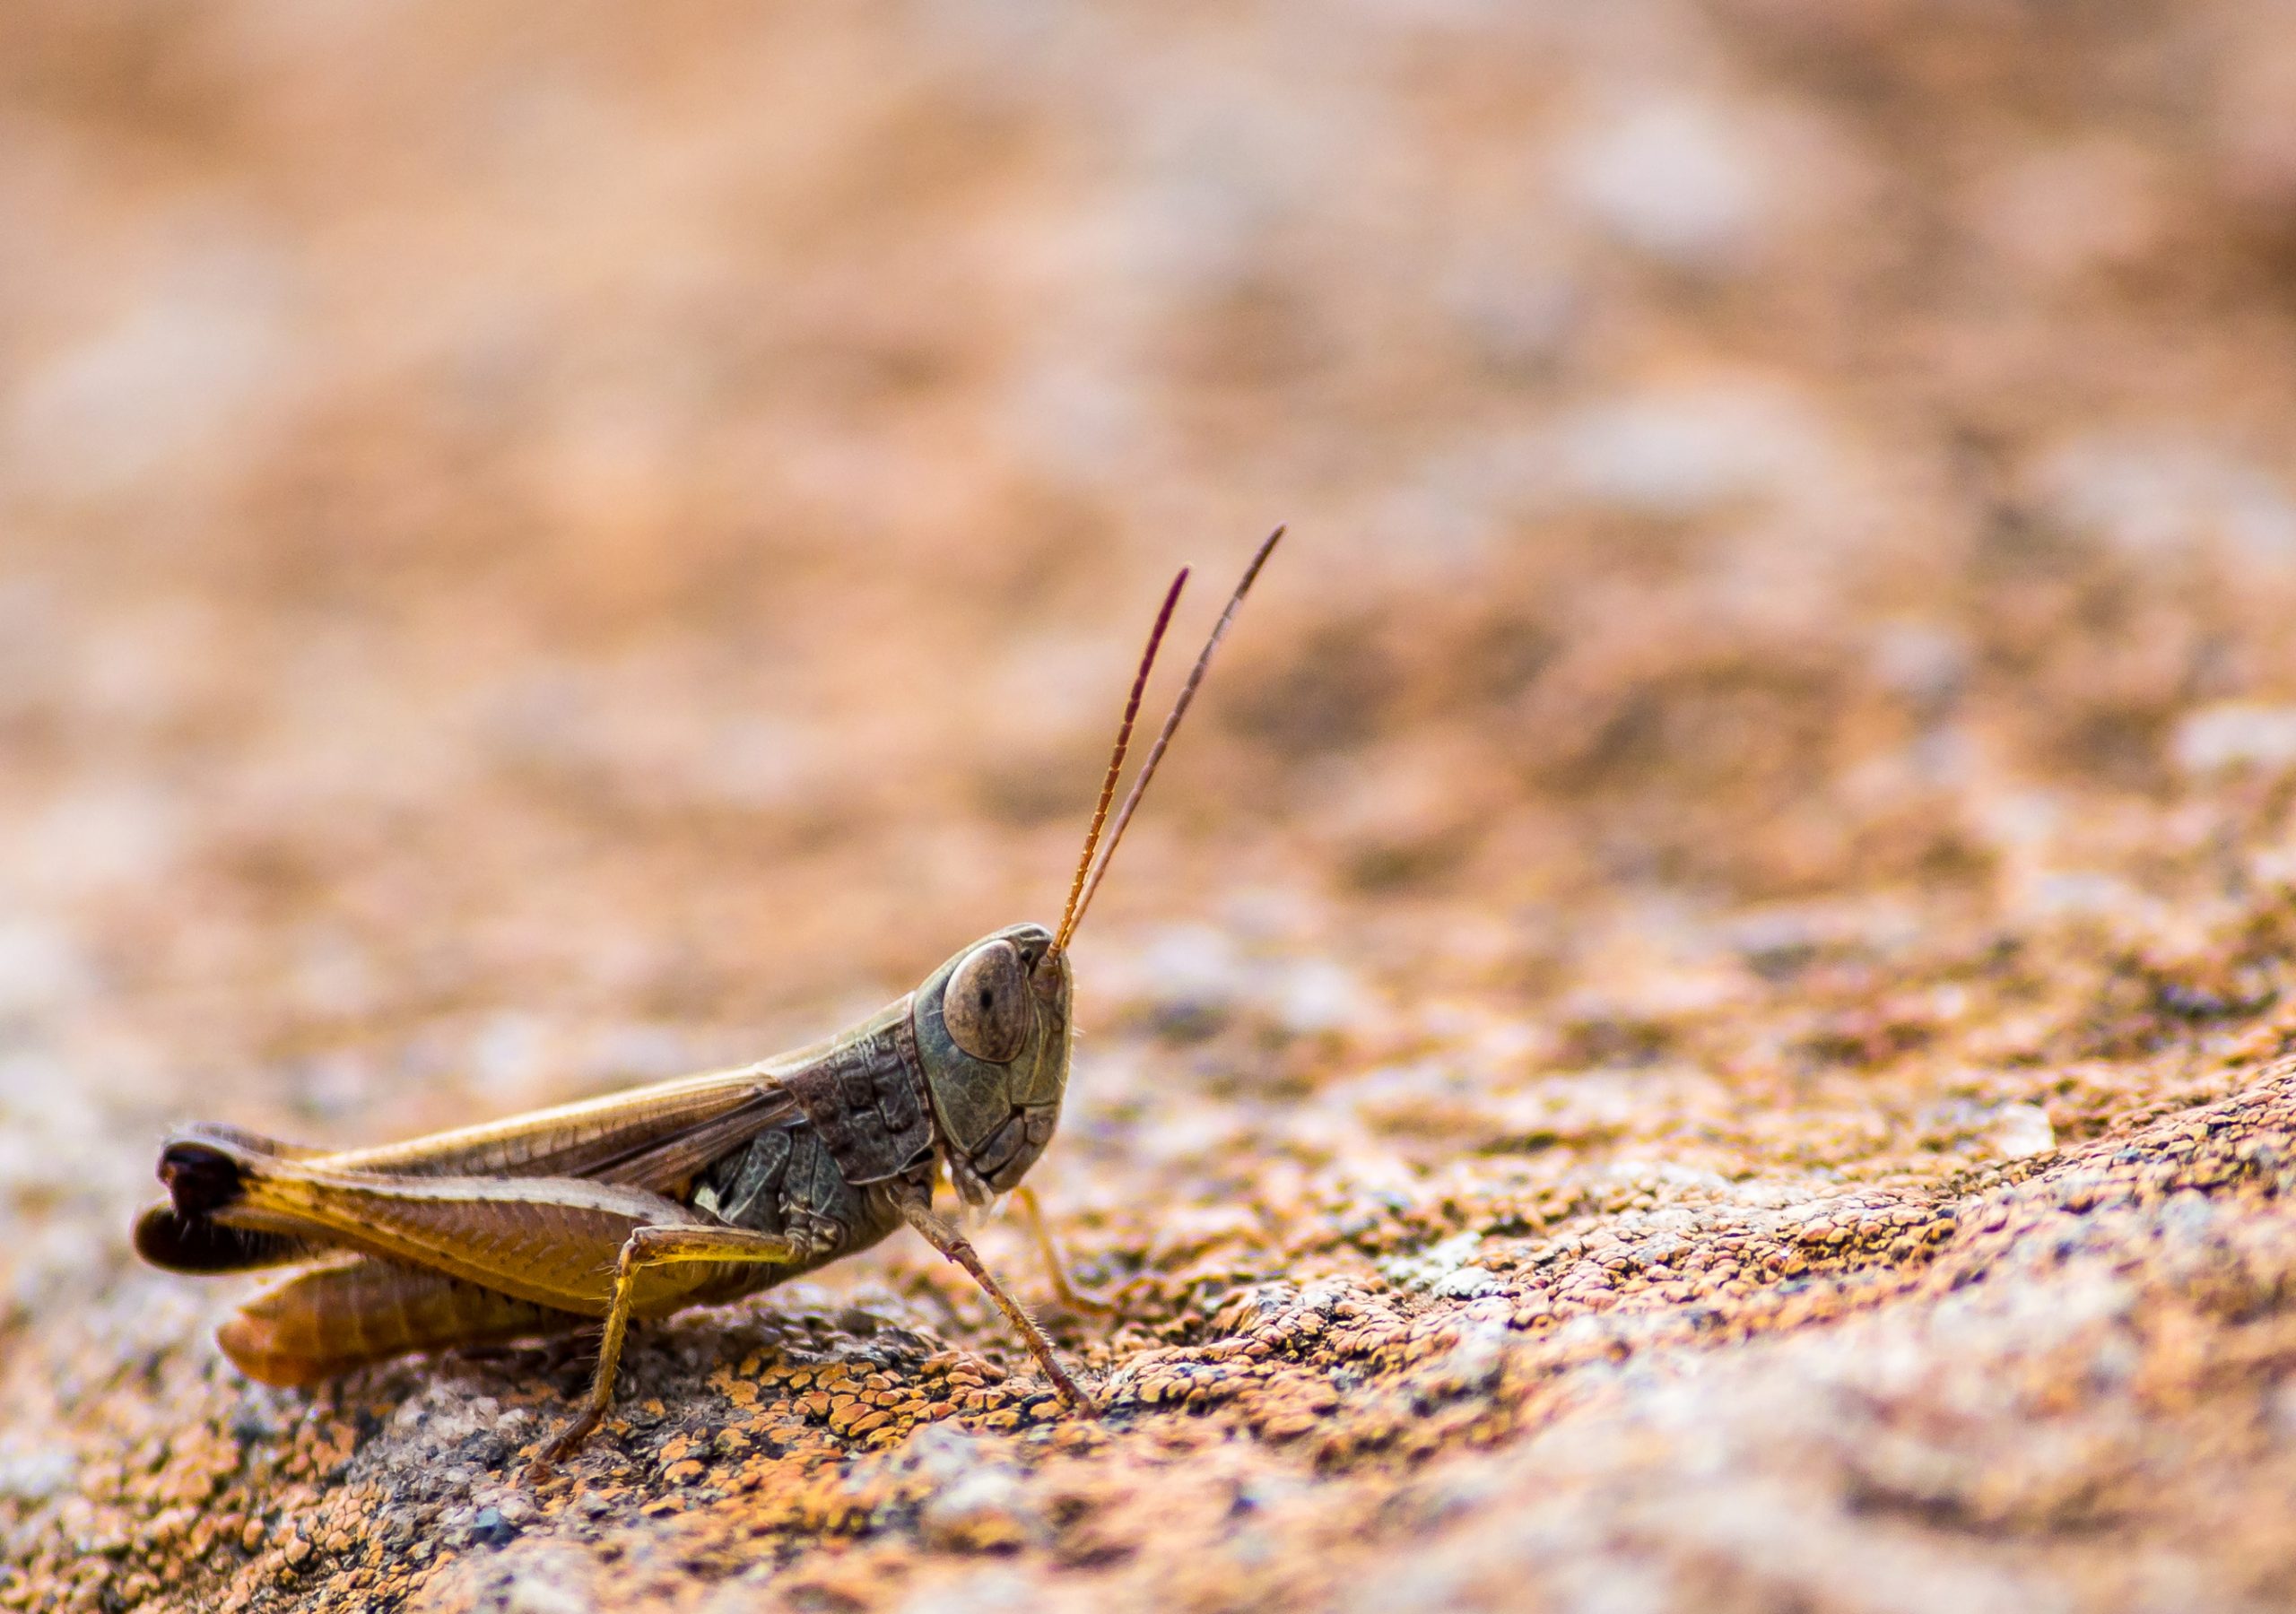 Grasshopper resting on the rock